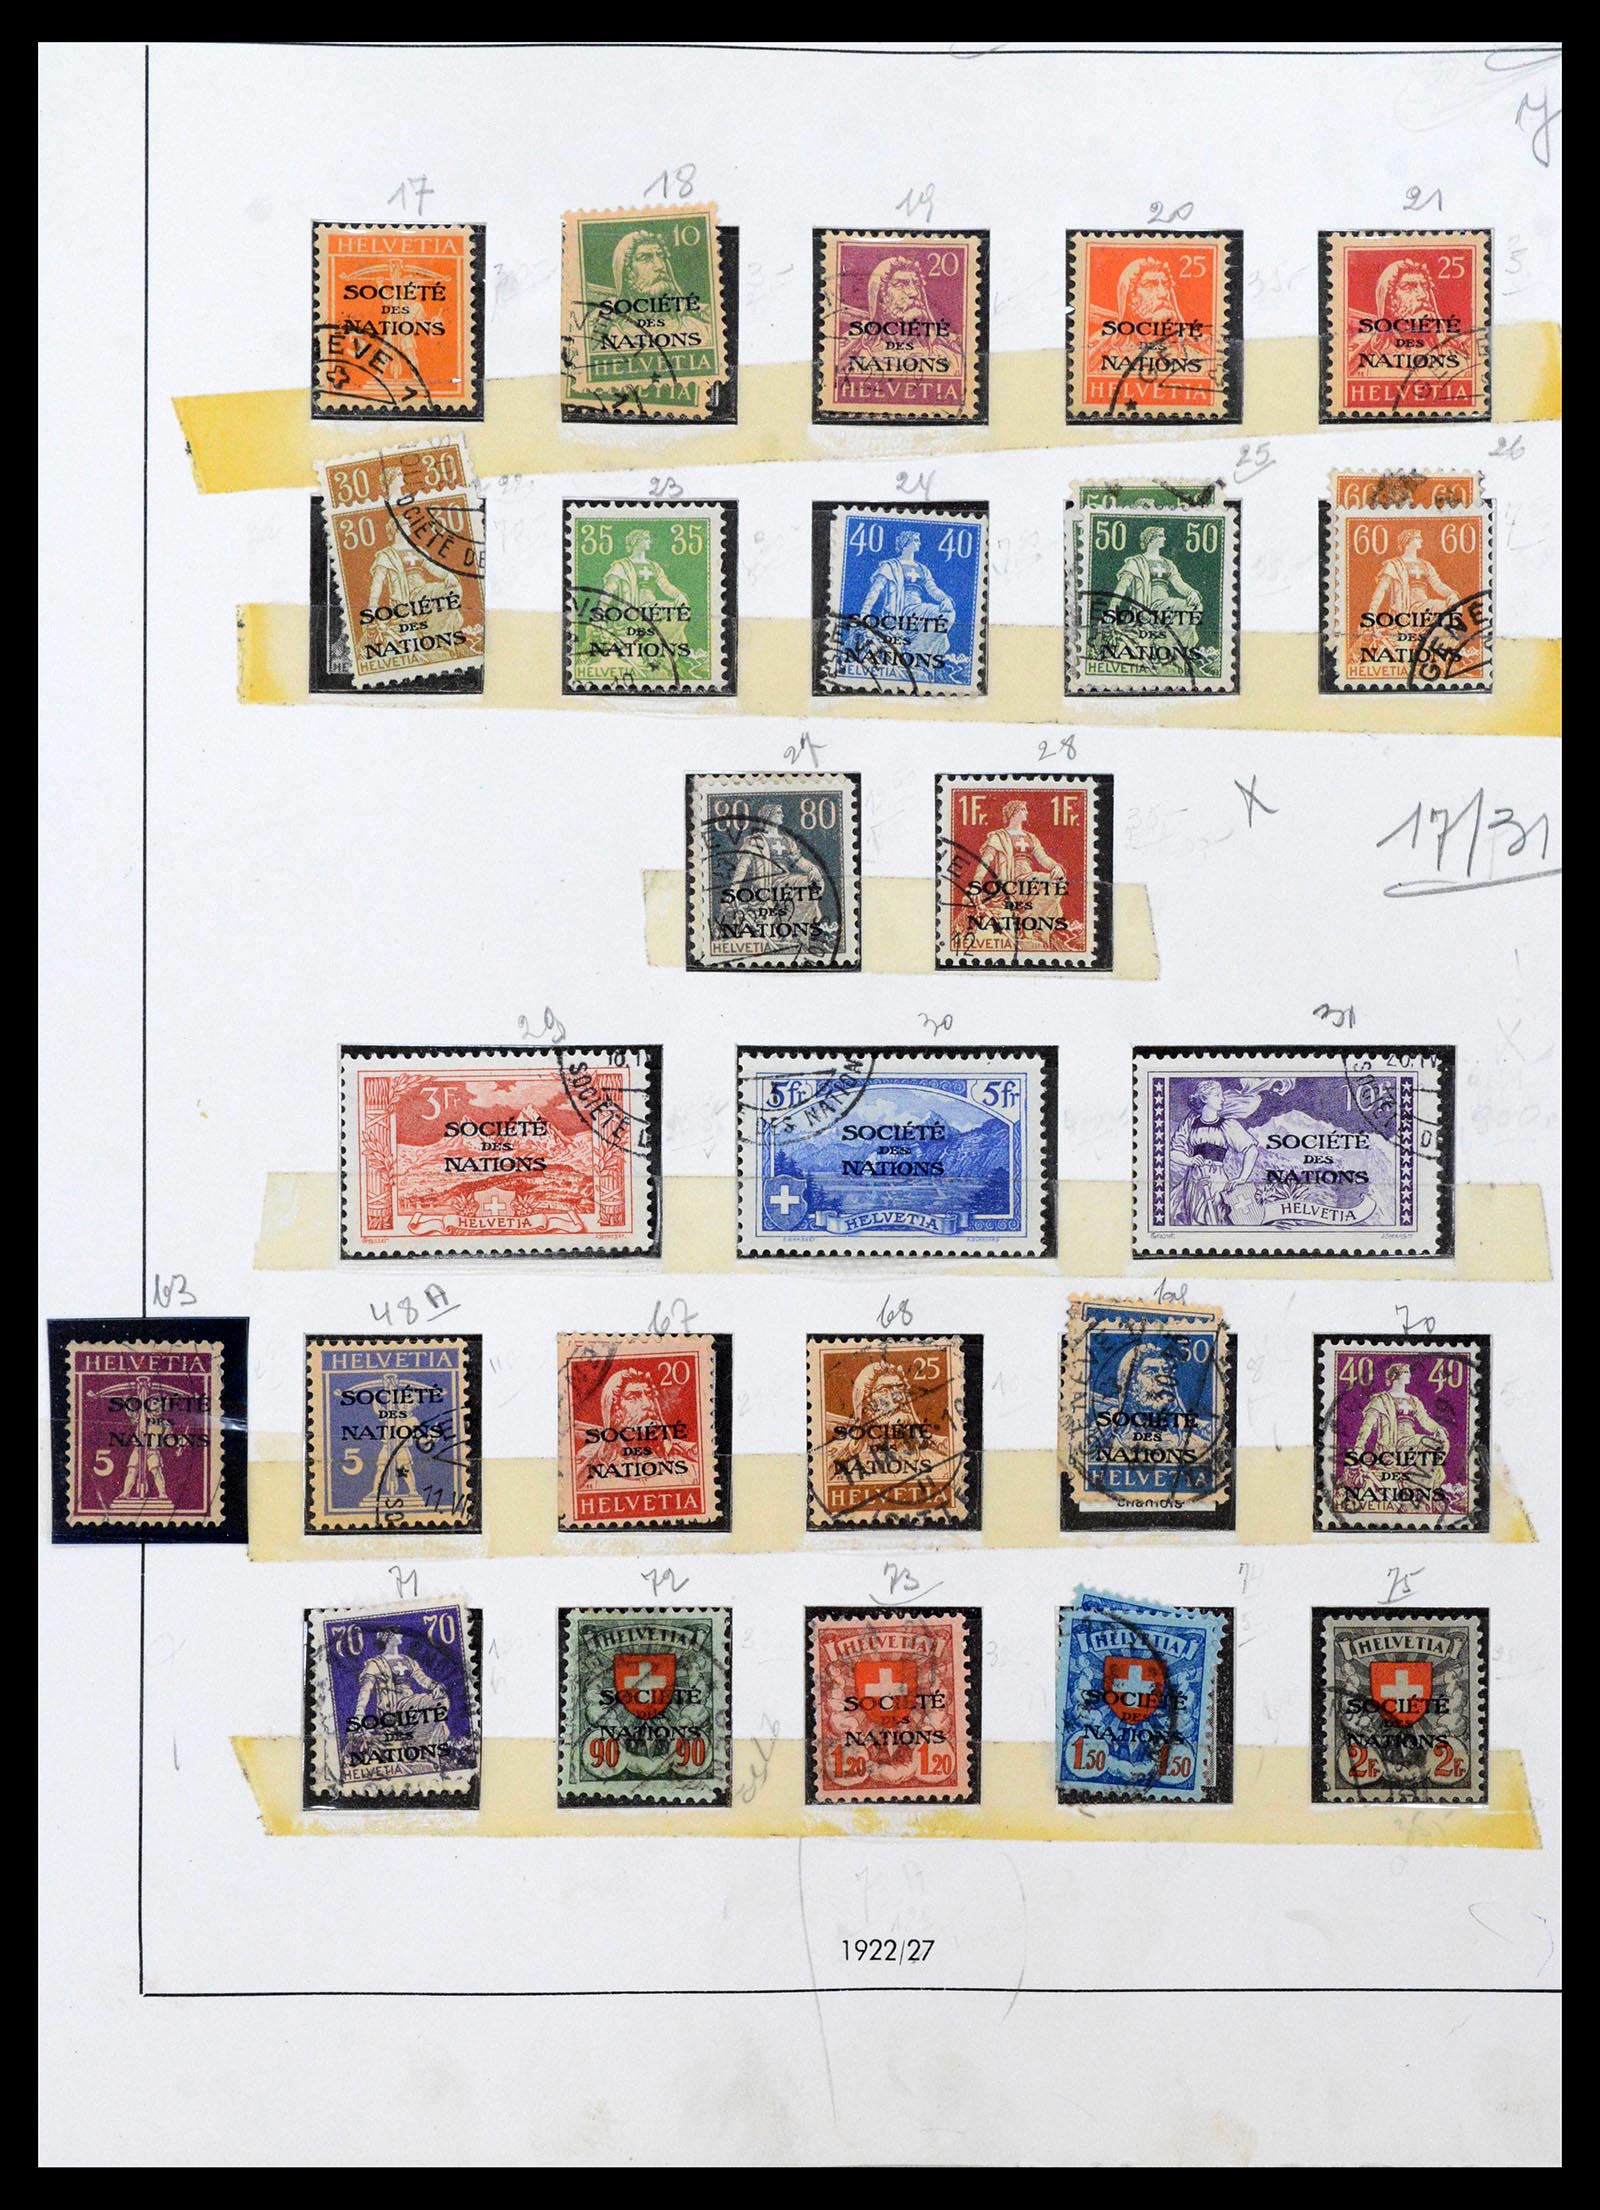 39299 0002 - Stamp collection 39299 Switzerland service 1918-1950.